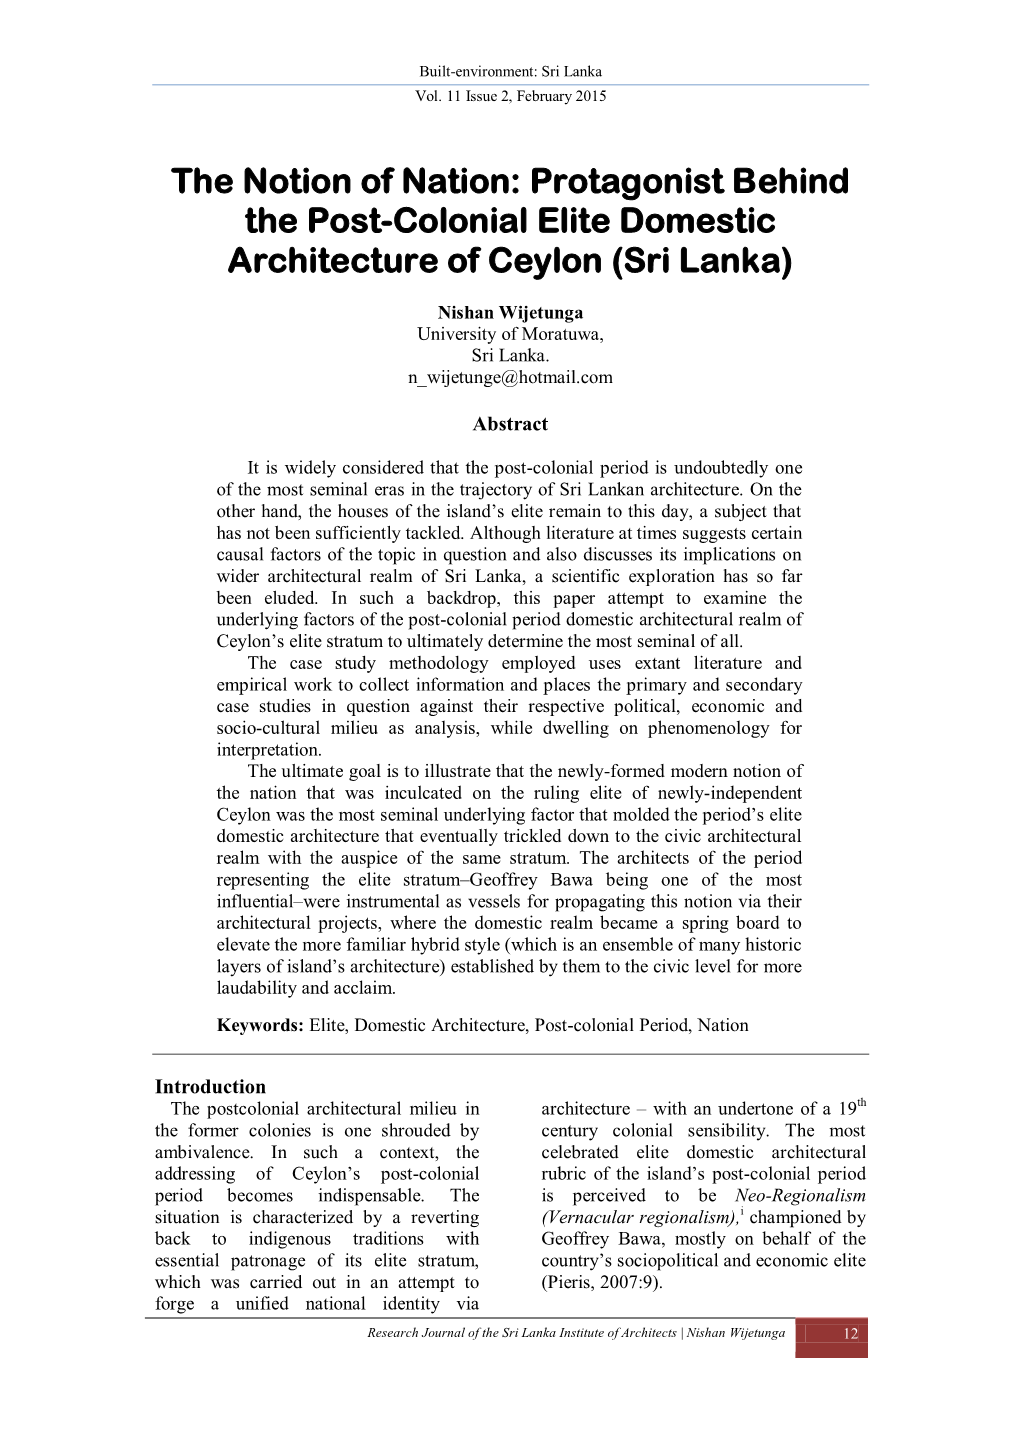 Protagonist Behind the Post-Colonial Elite Domestic Architecture of Ceylon (Sri Lanka)